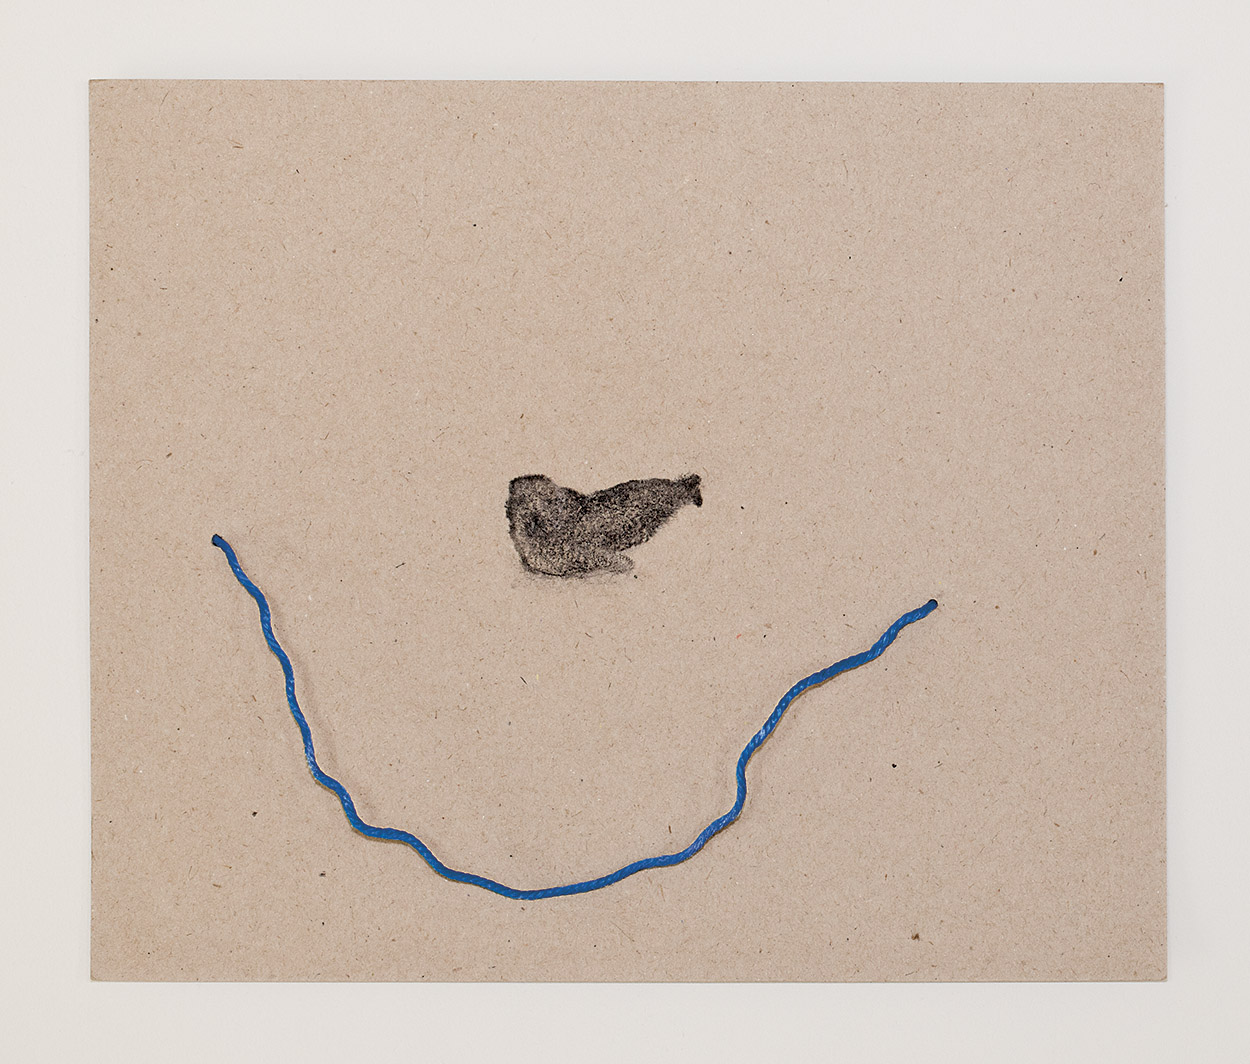    Monachus monachus II    / Foca Monge  Charcoal drawing and plastic found at the beach. 28 x 23,5 cm. 